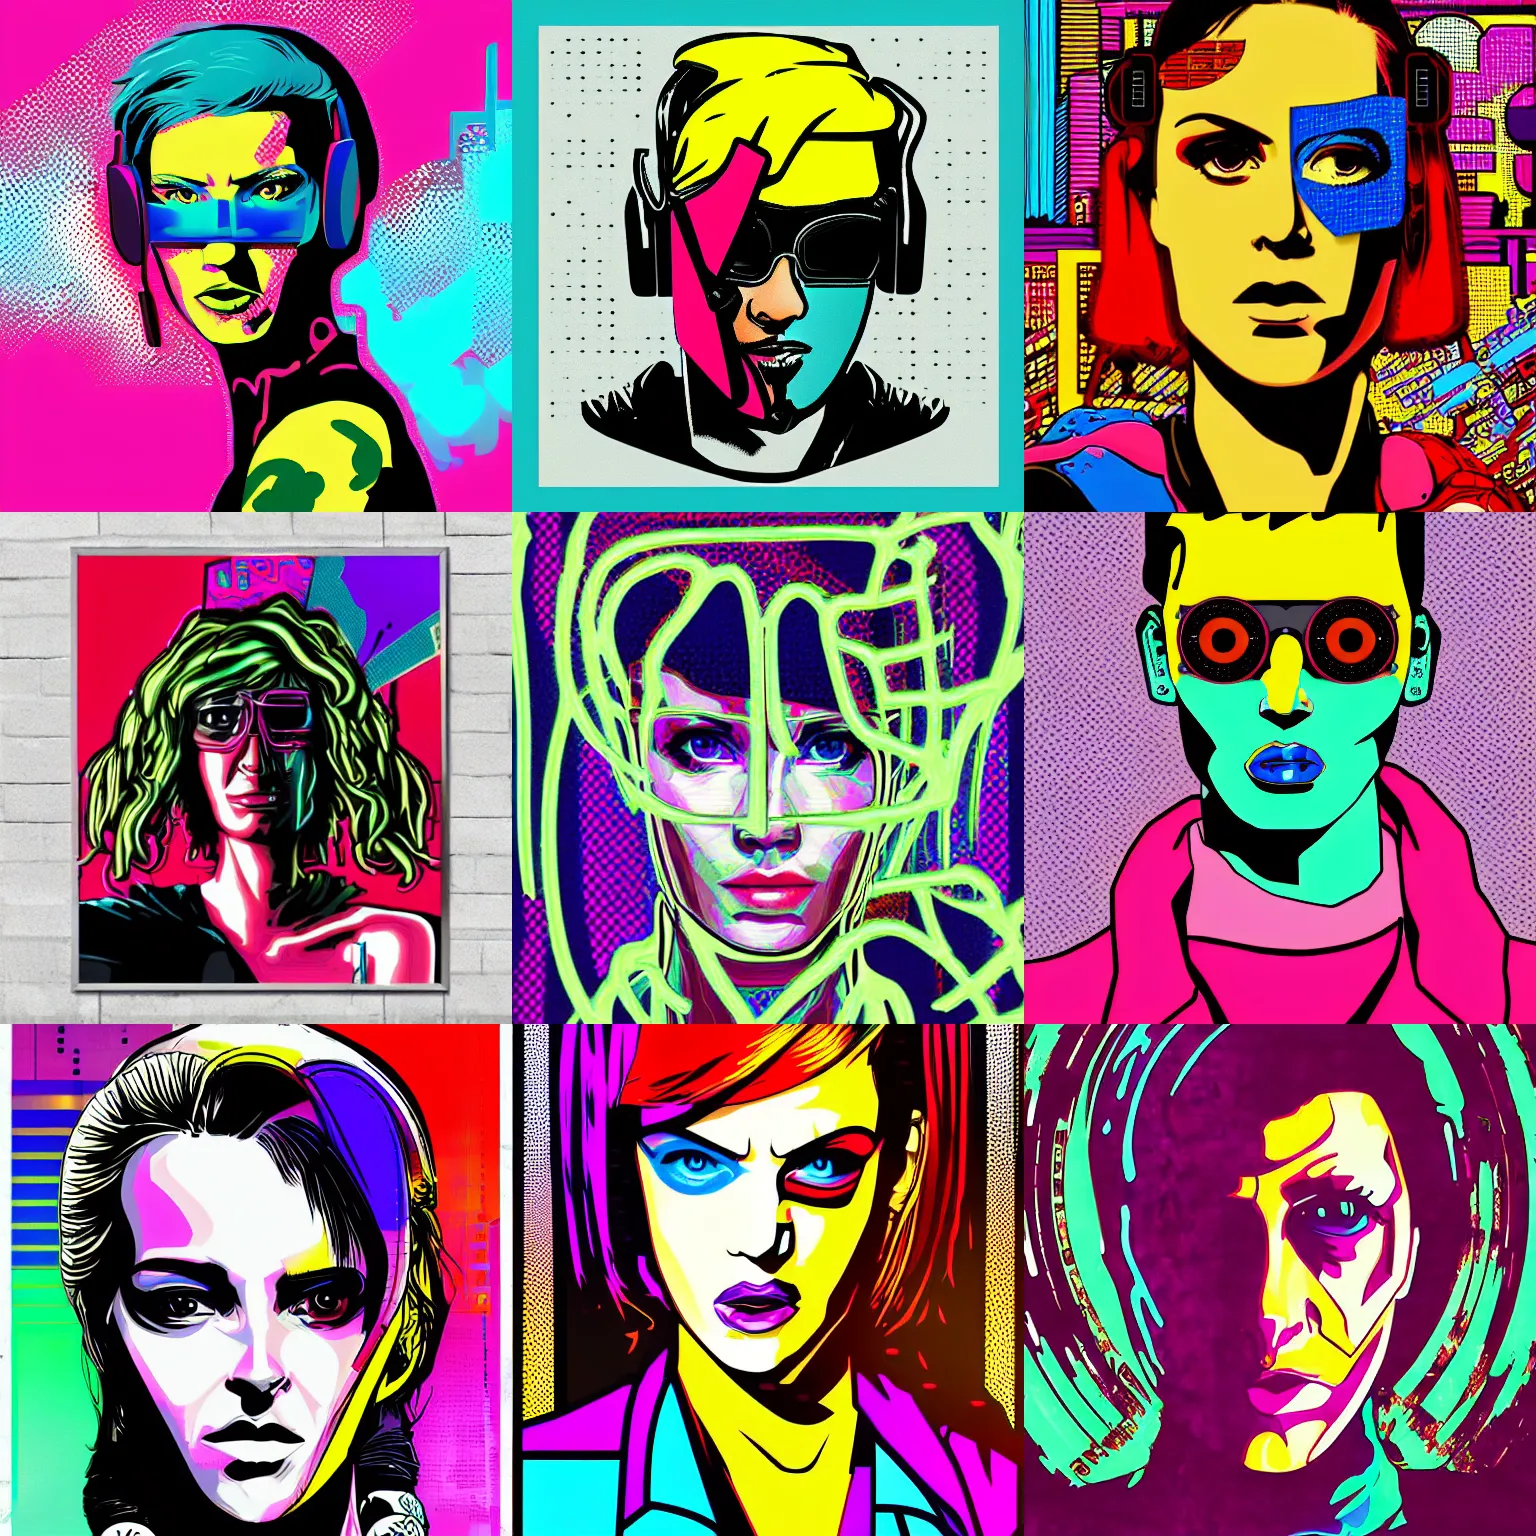 Prompt: cyberpunk pop art portrait